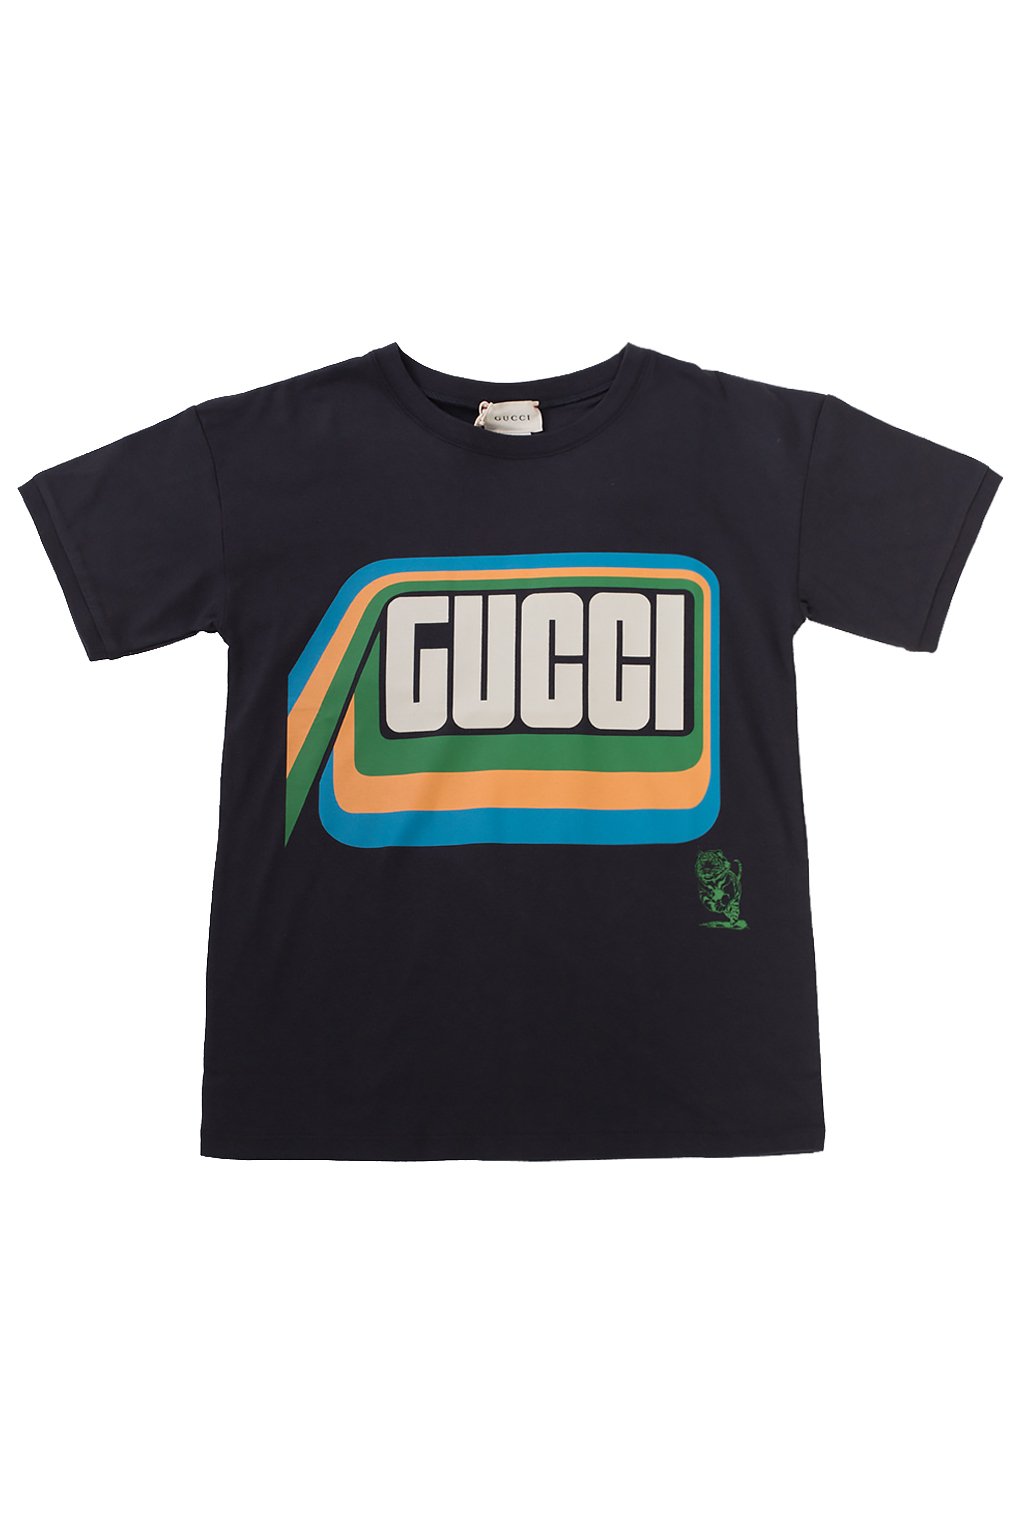 Logo T Shirt Gucci Kids Vitkac Singapore